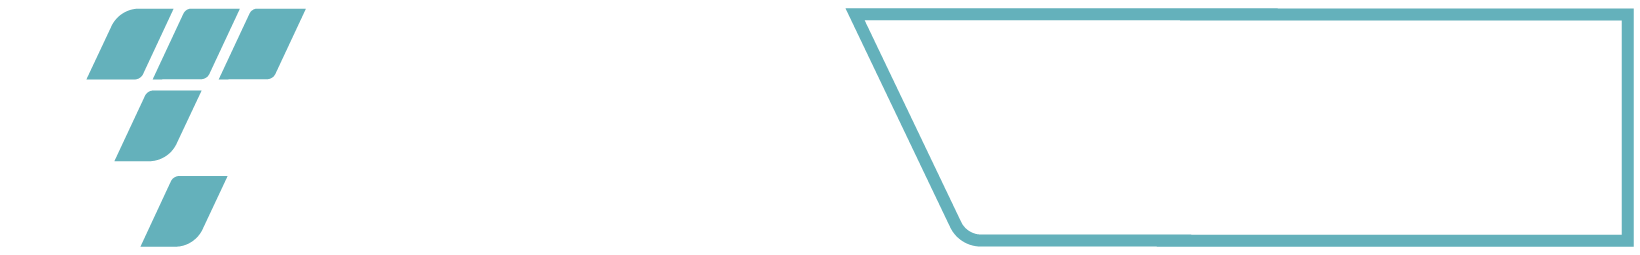 ARA Marine Logo White and Colour Version